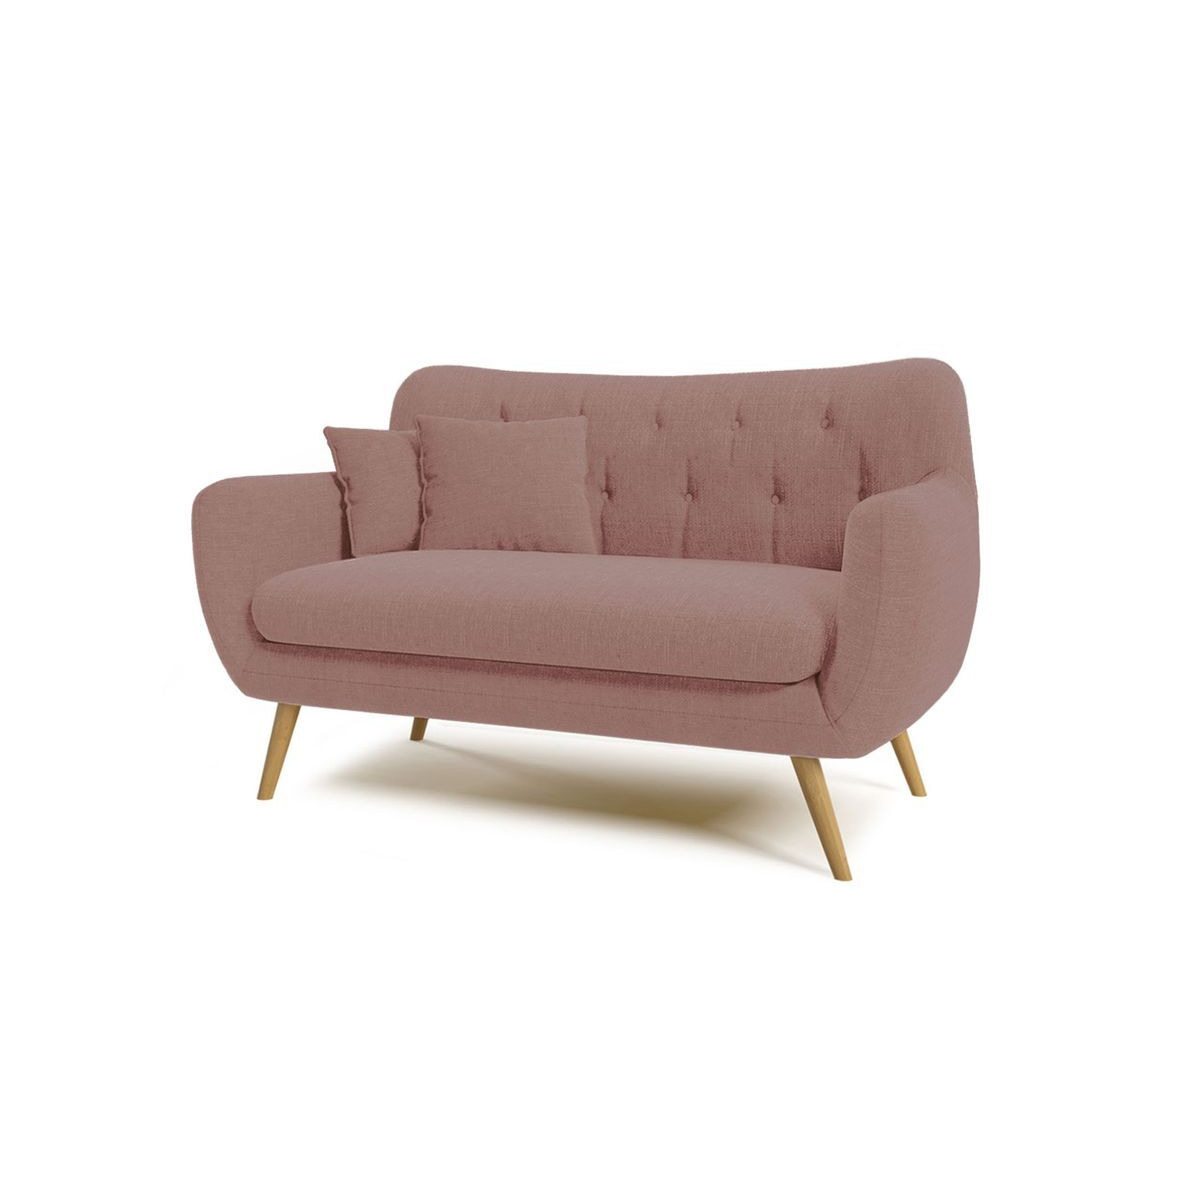 Revive 2 Seater Sofa, pastel pink - image 1